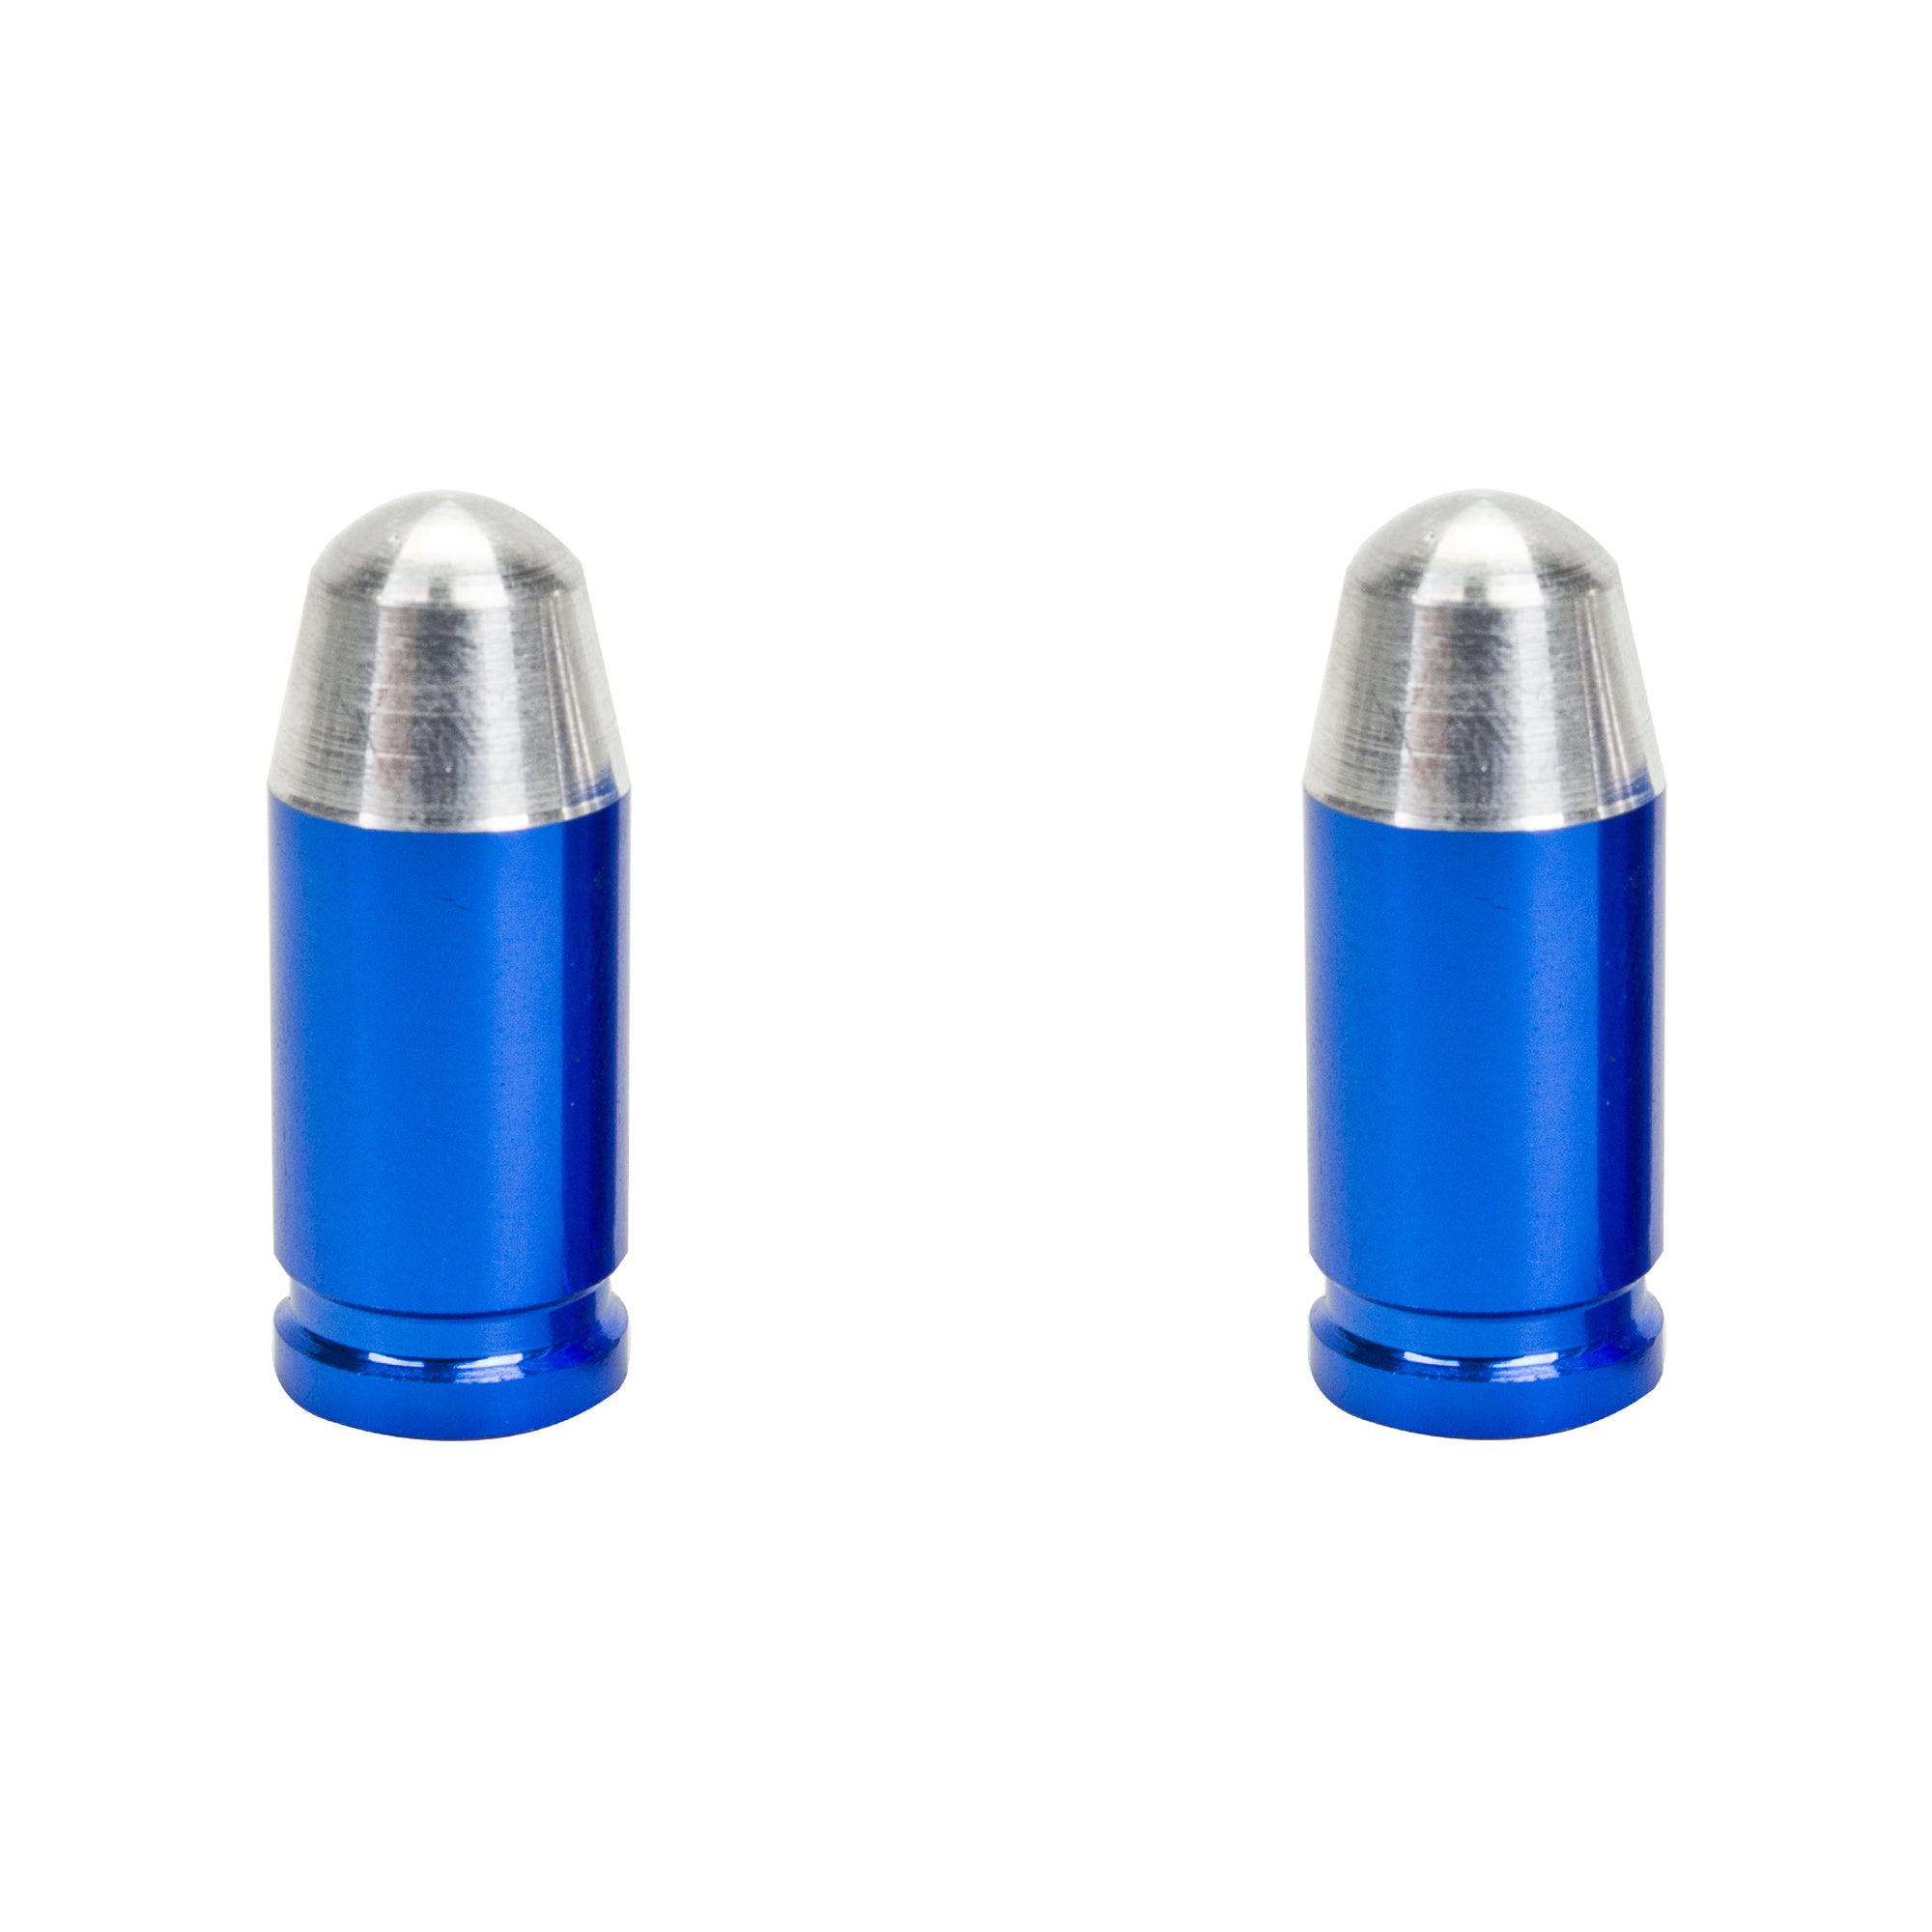 Trik Topz Bullet Tip Aluminum Valve Caps - Pair - Blue & Silver